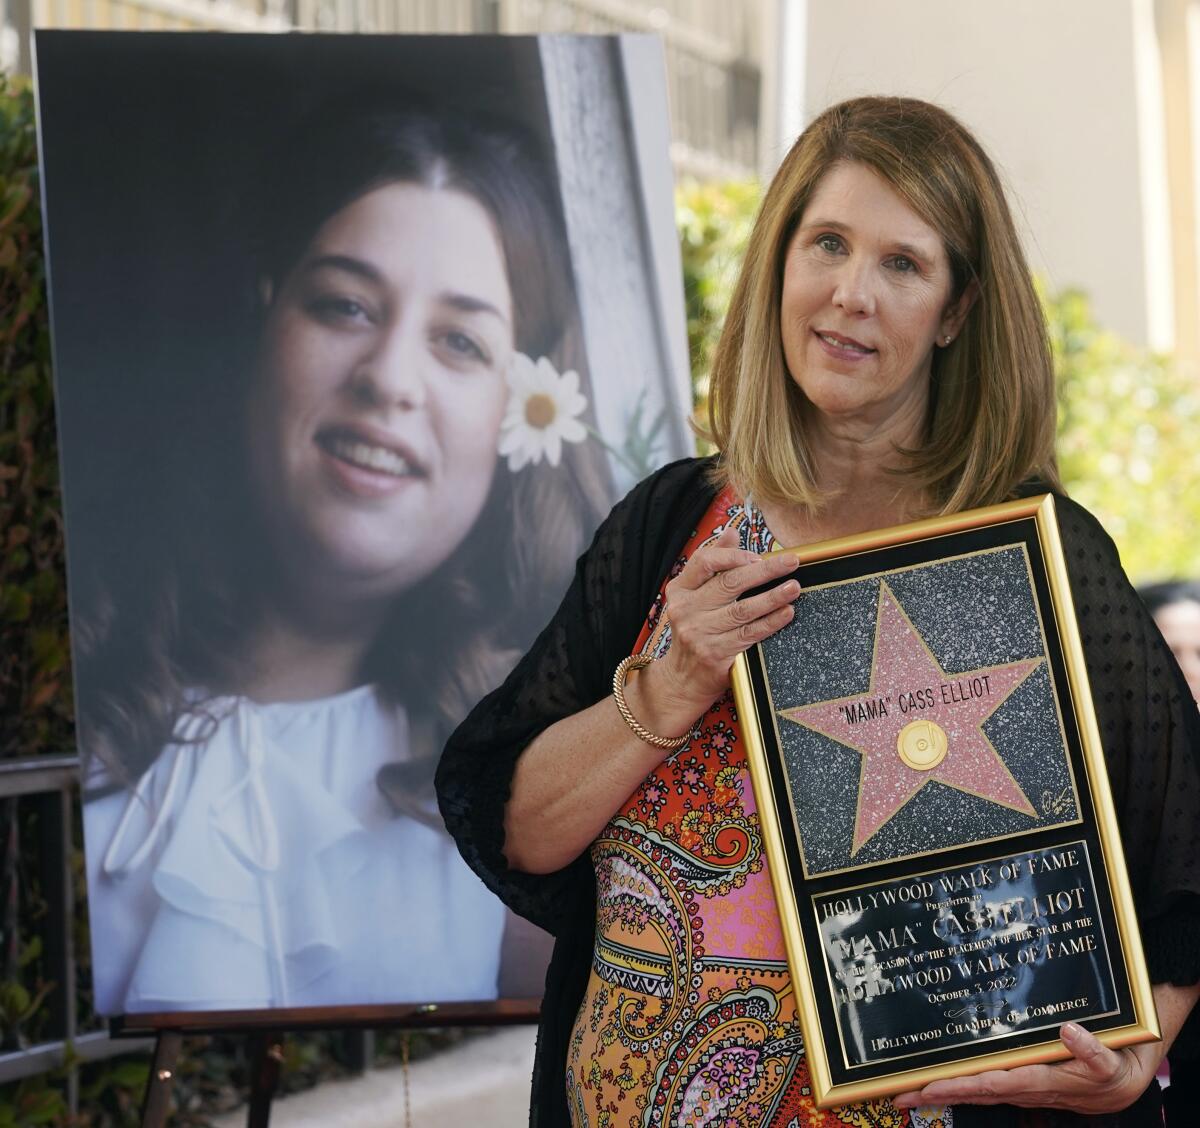 Owen Elliot-Kugell holds a framed Hollywood Walk of Fame star next to a photo of 'Mama' Cass Elliot